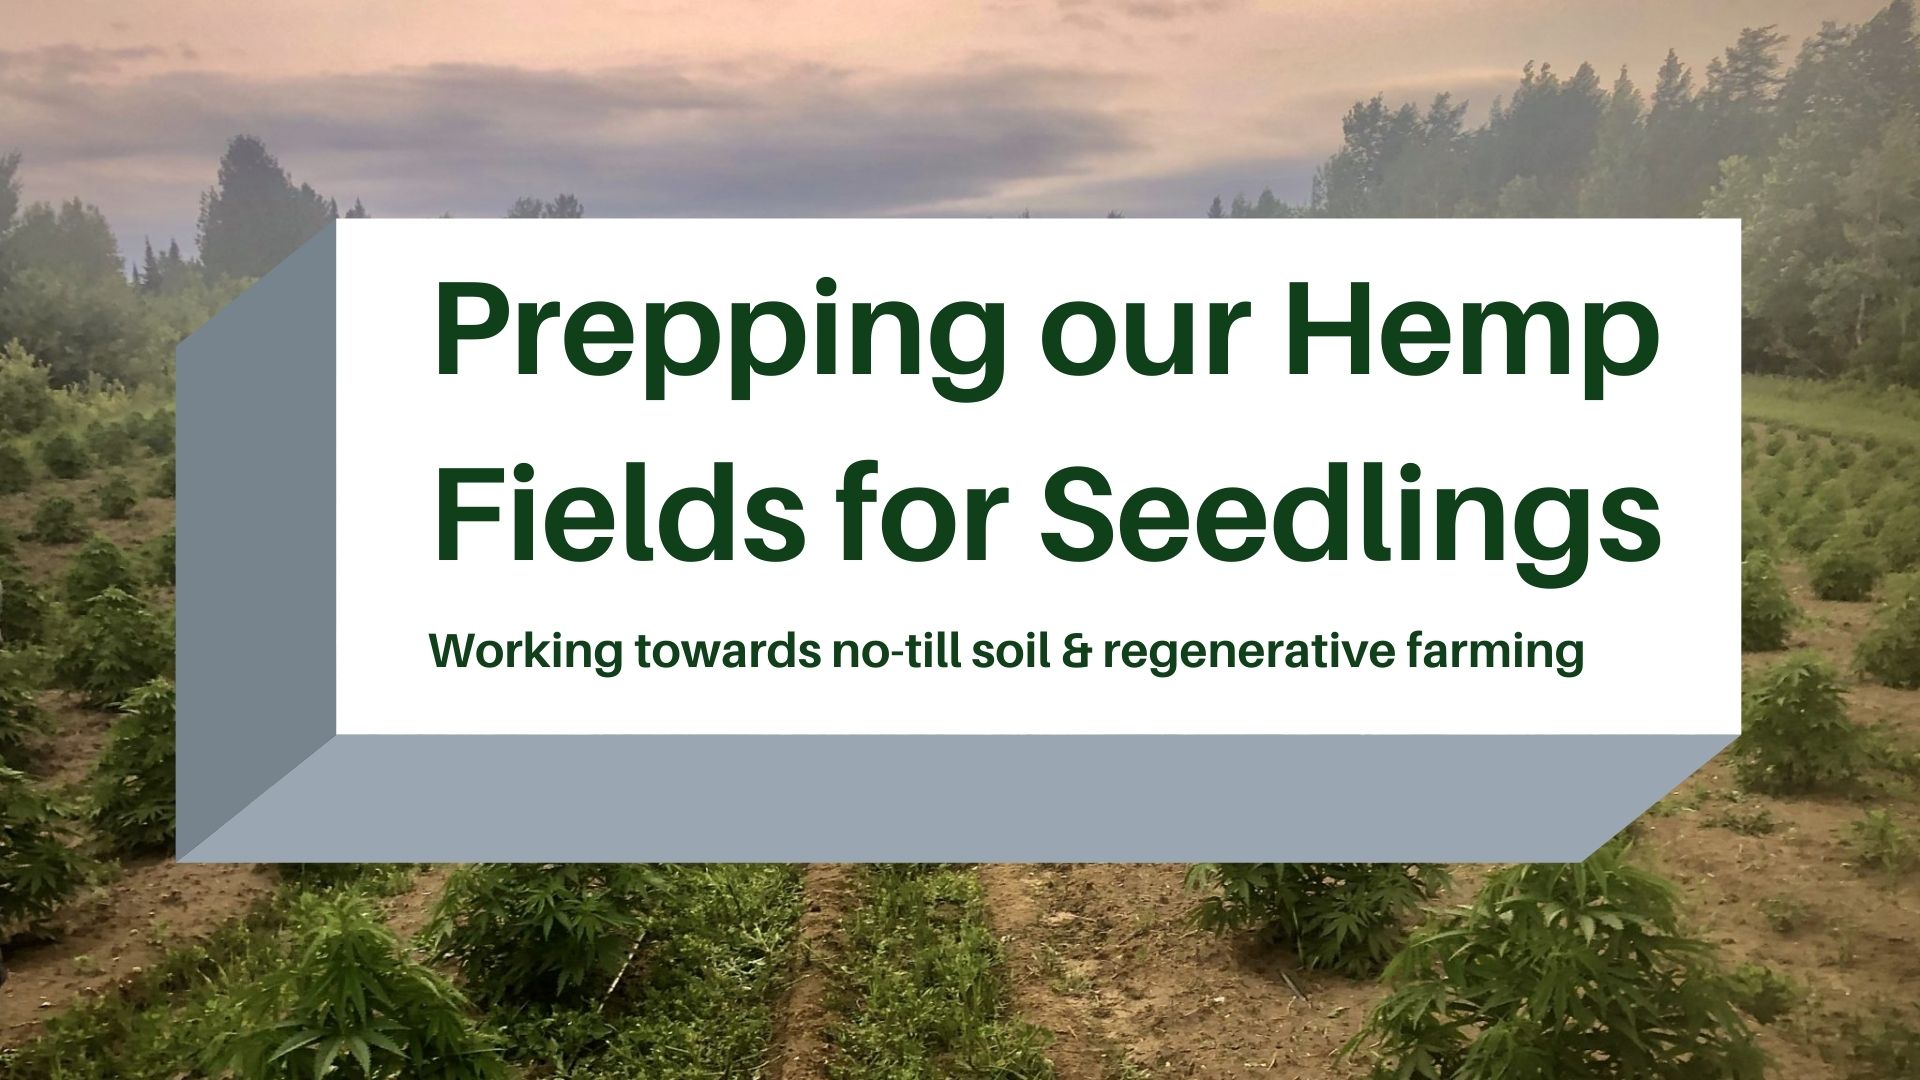 Prepping our Hemp Fields for Seedlings blog post cover